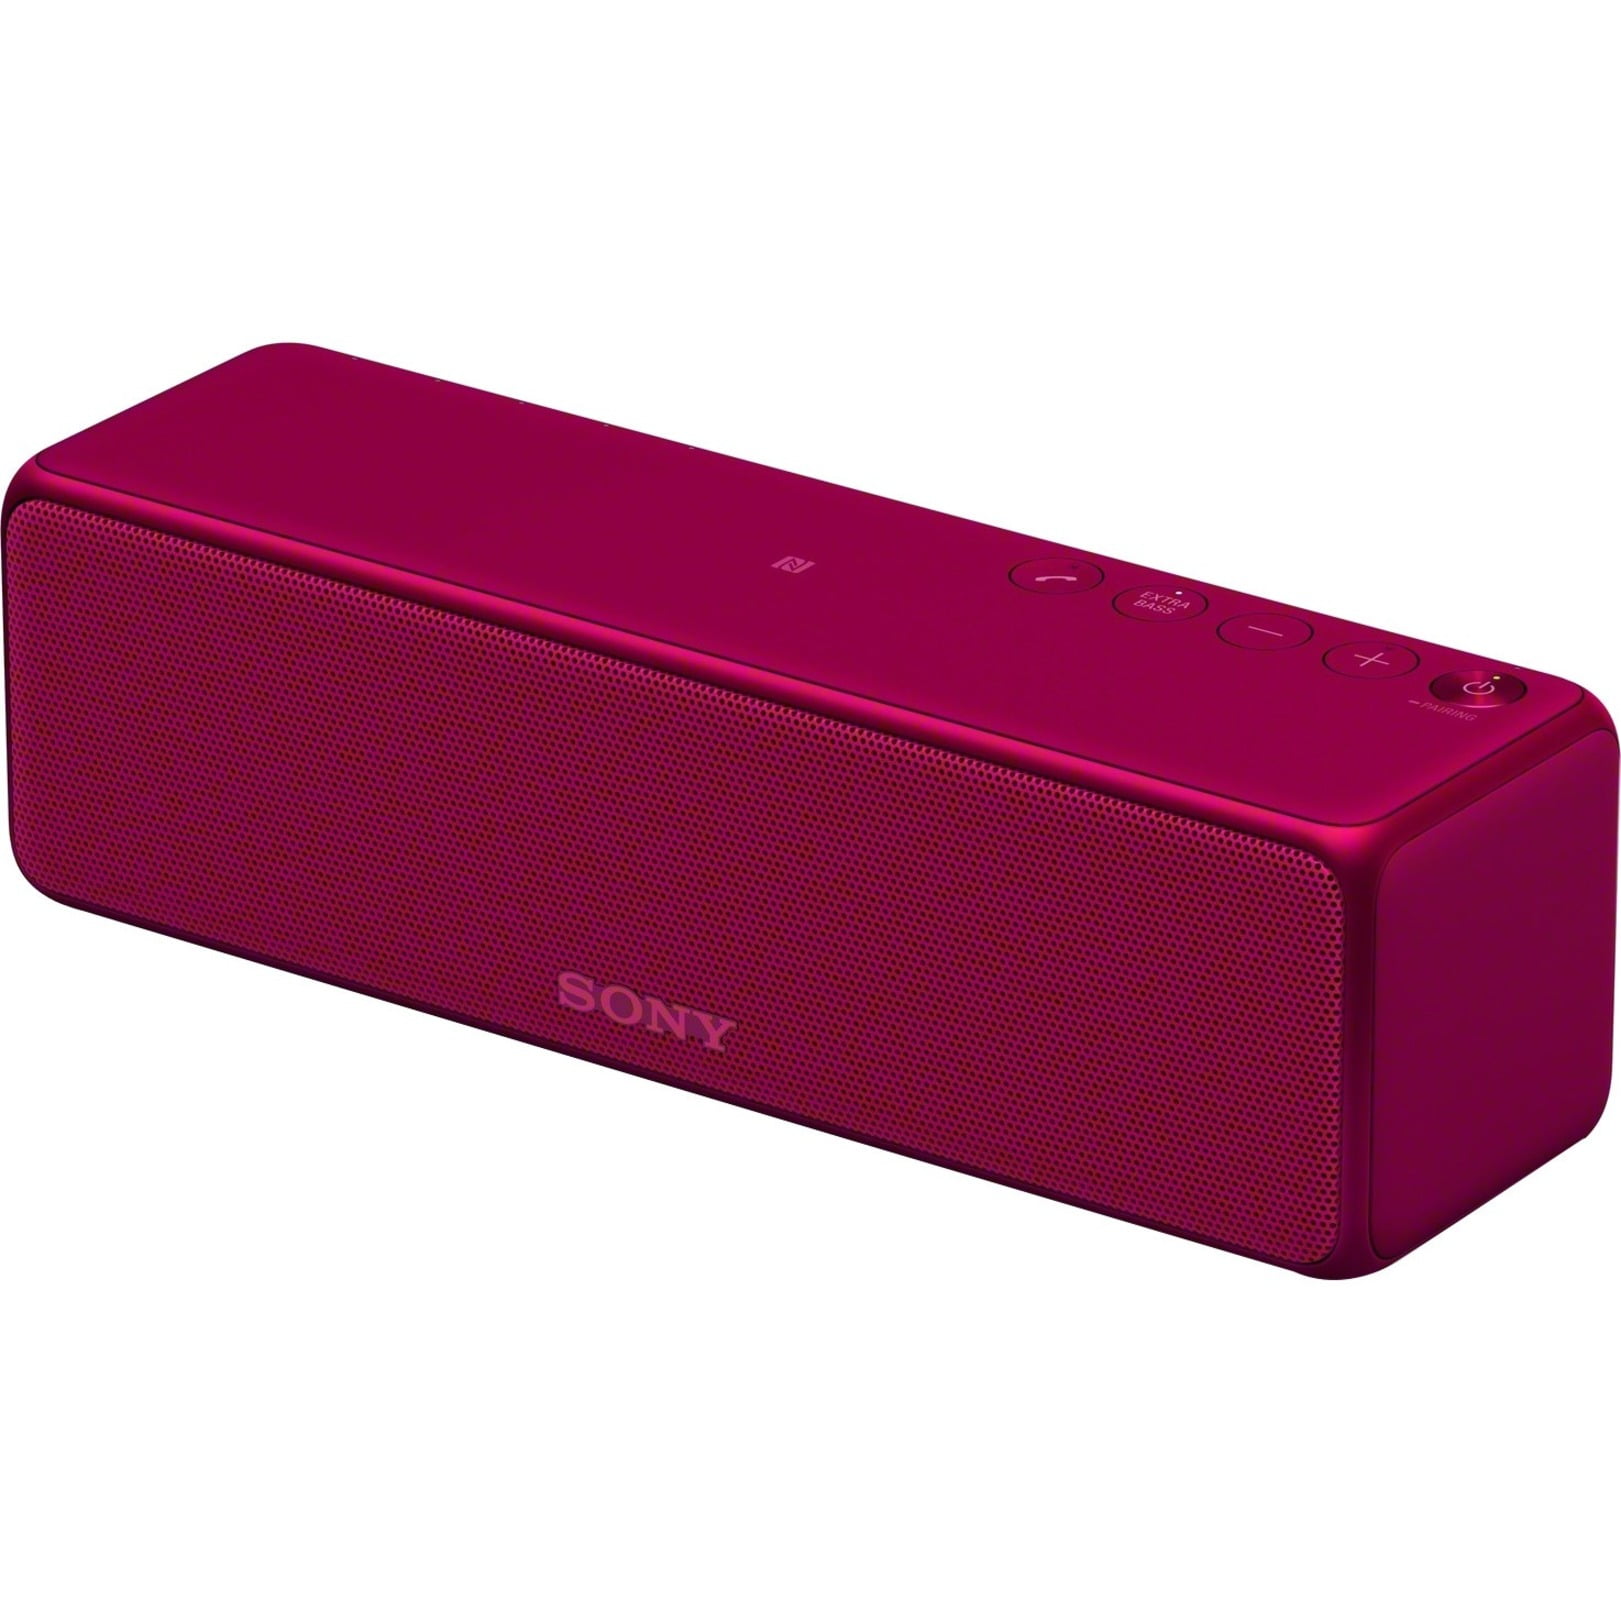 Sony h.ear go Portable Bluetooth Speaker, Red, SRS-HG1 - Walmart.com